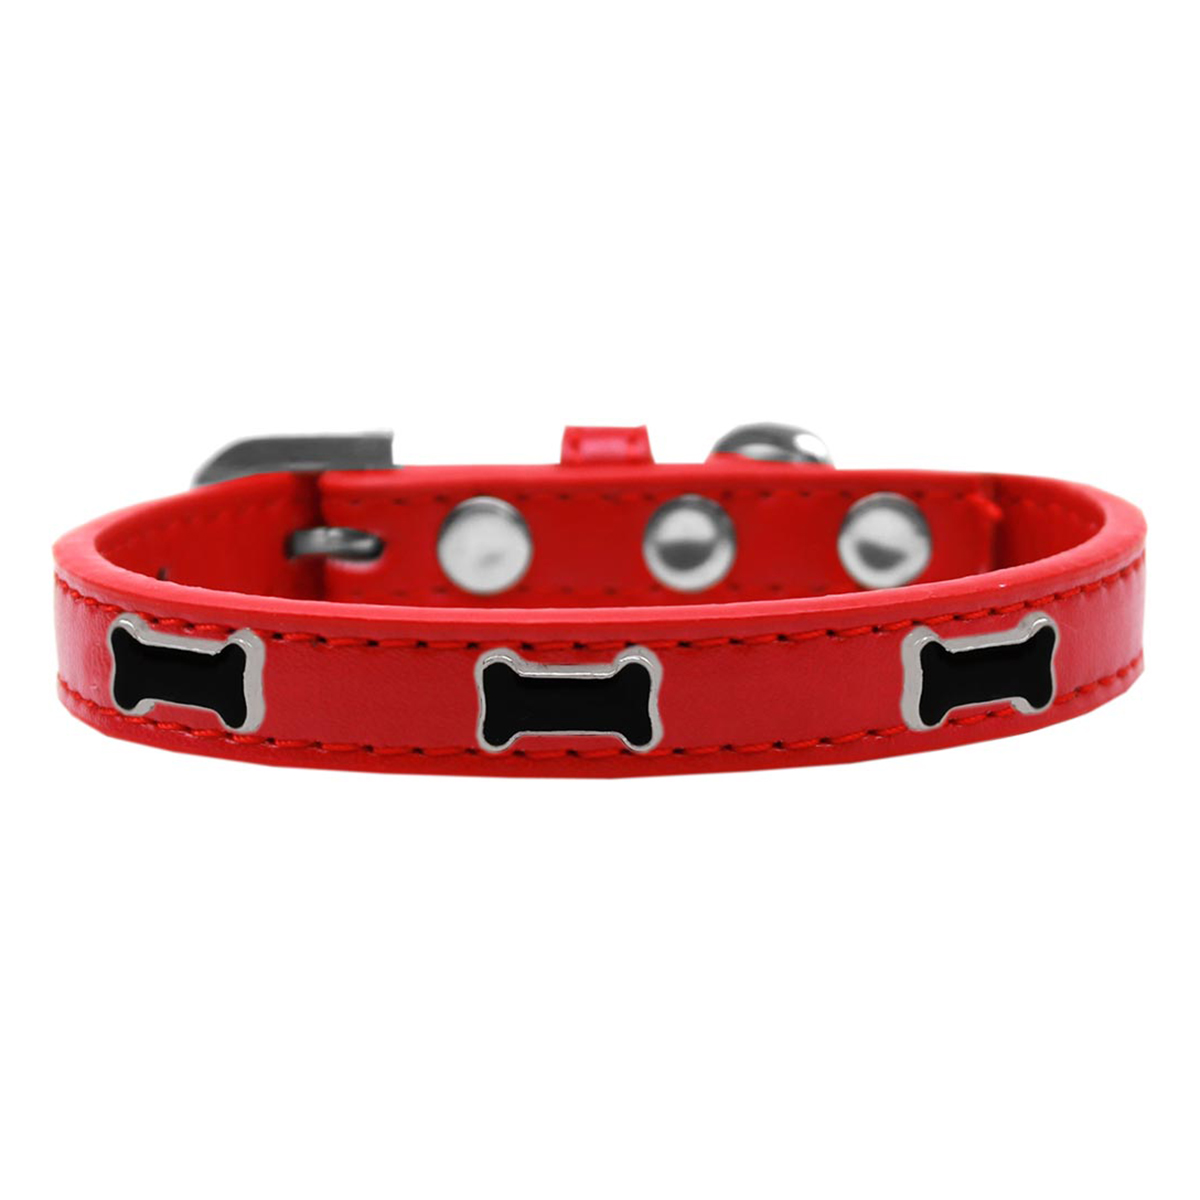 Black Bone Widget Dog Collar, Red - Size 20